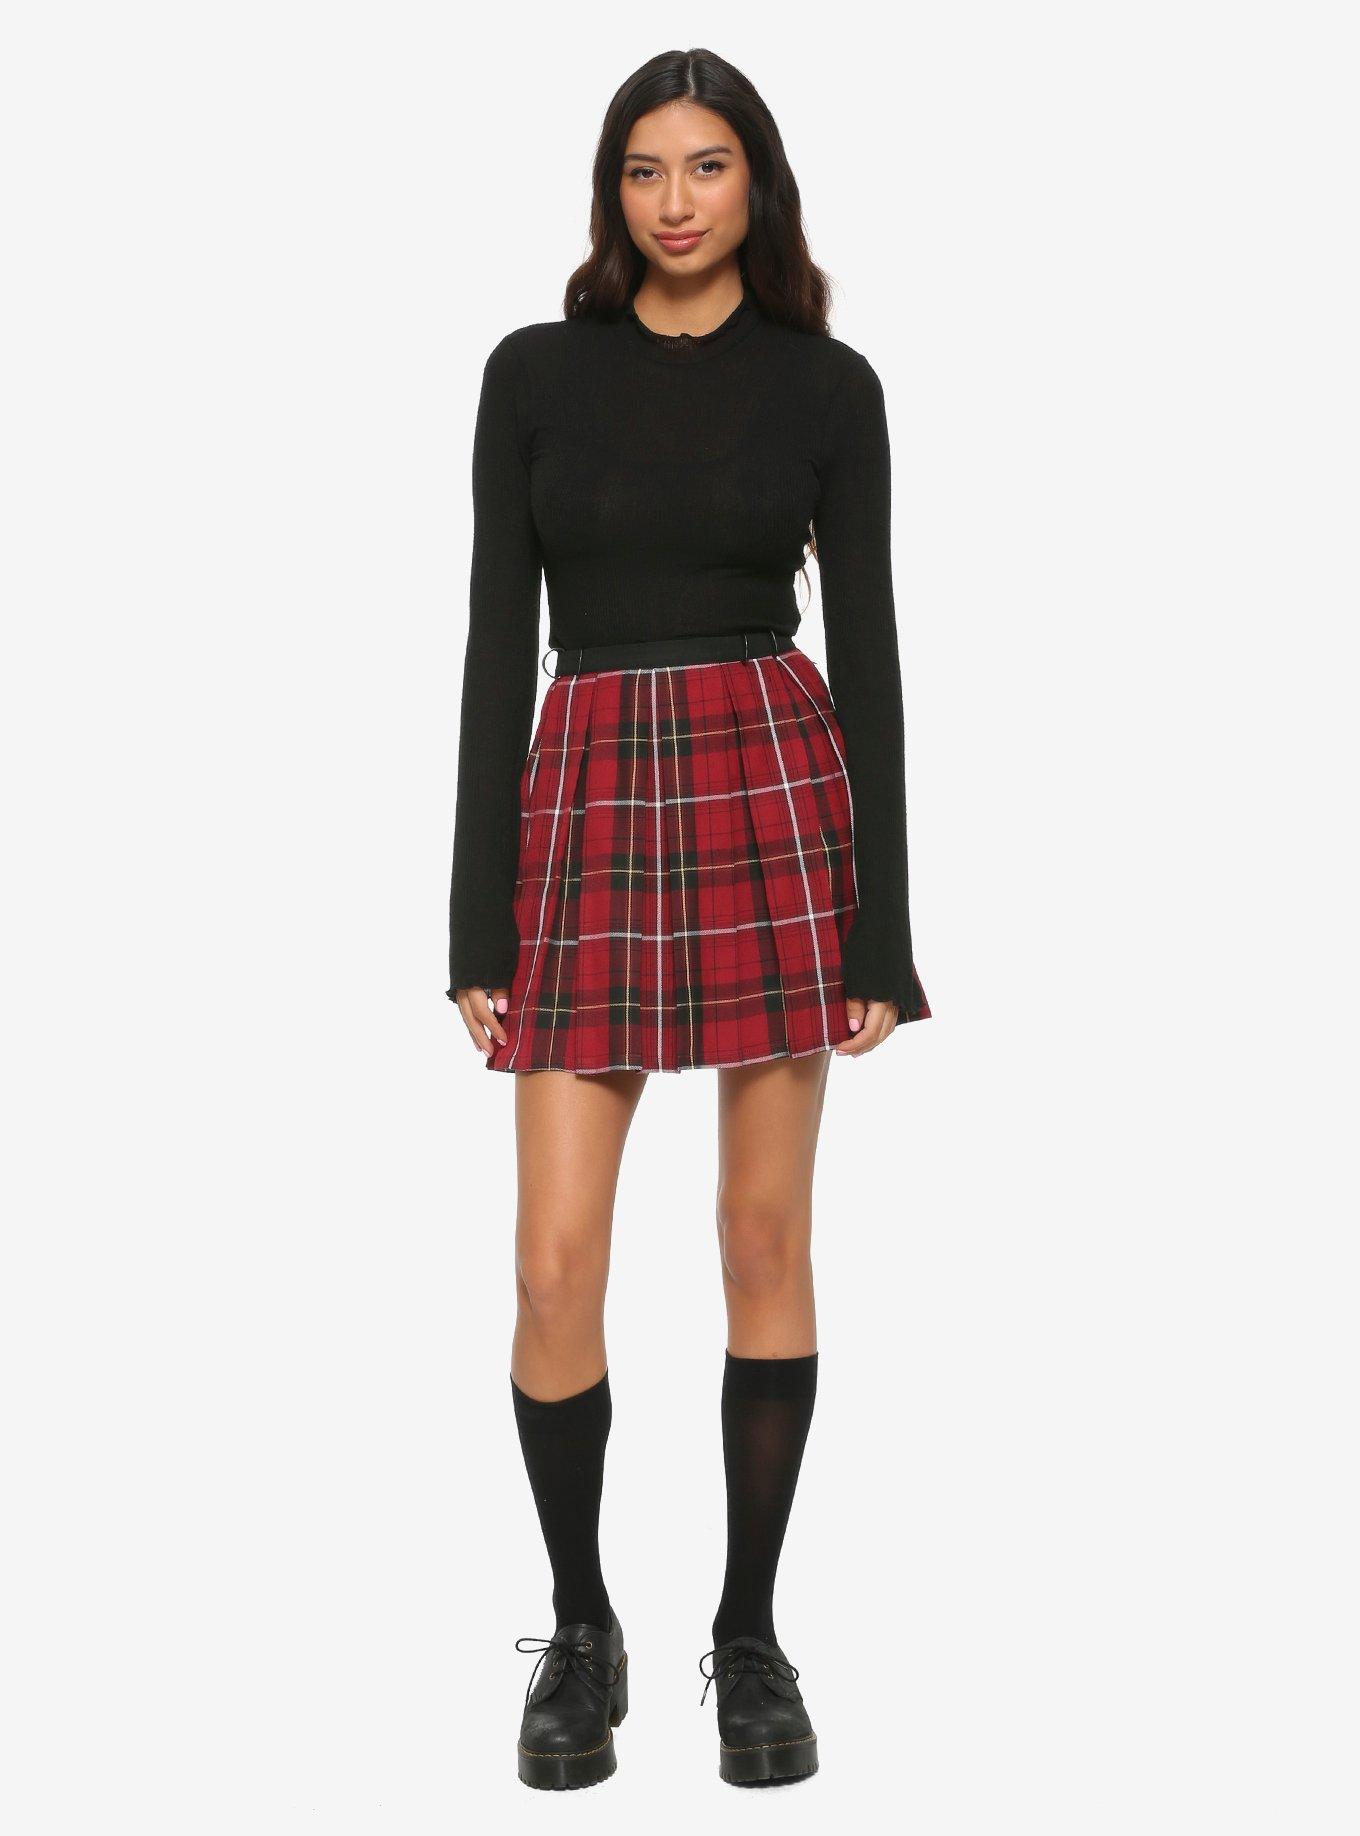 Burgundy Plaid D-Ring Skirt, PLAID - RED, alternate